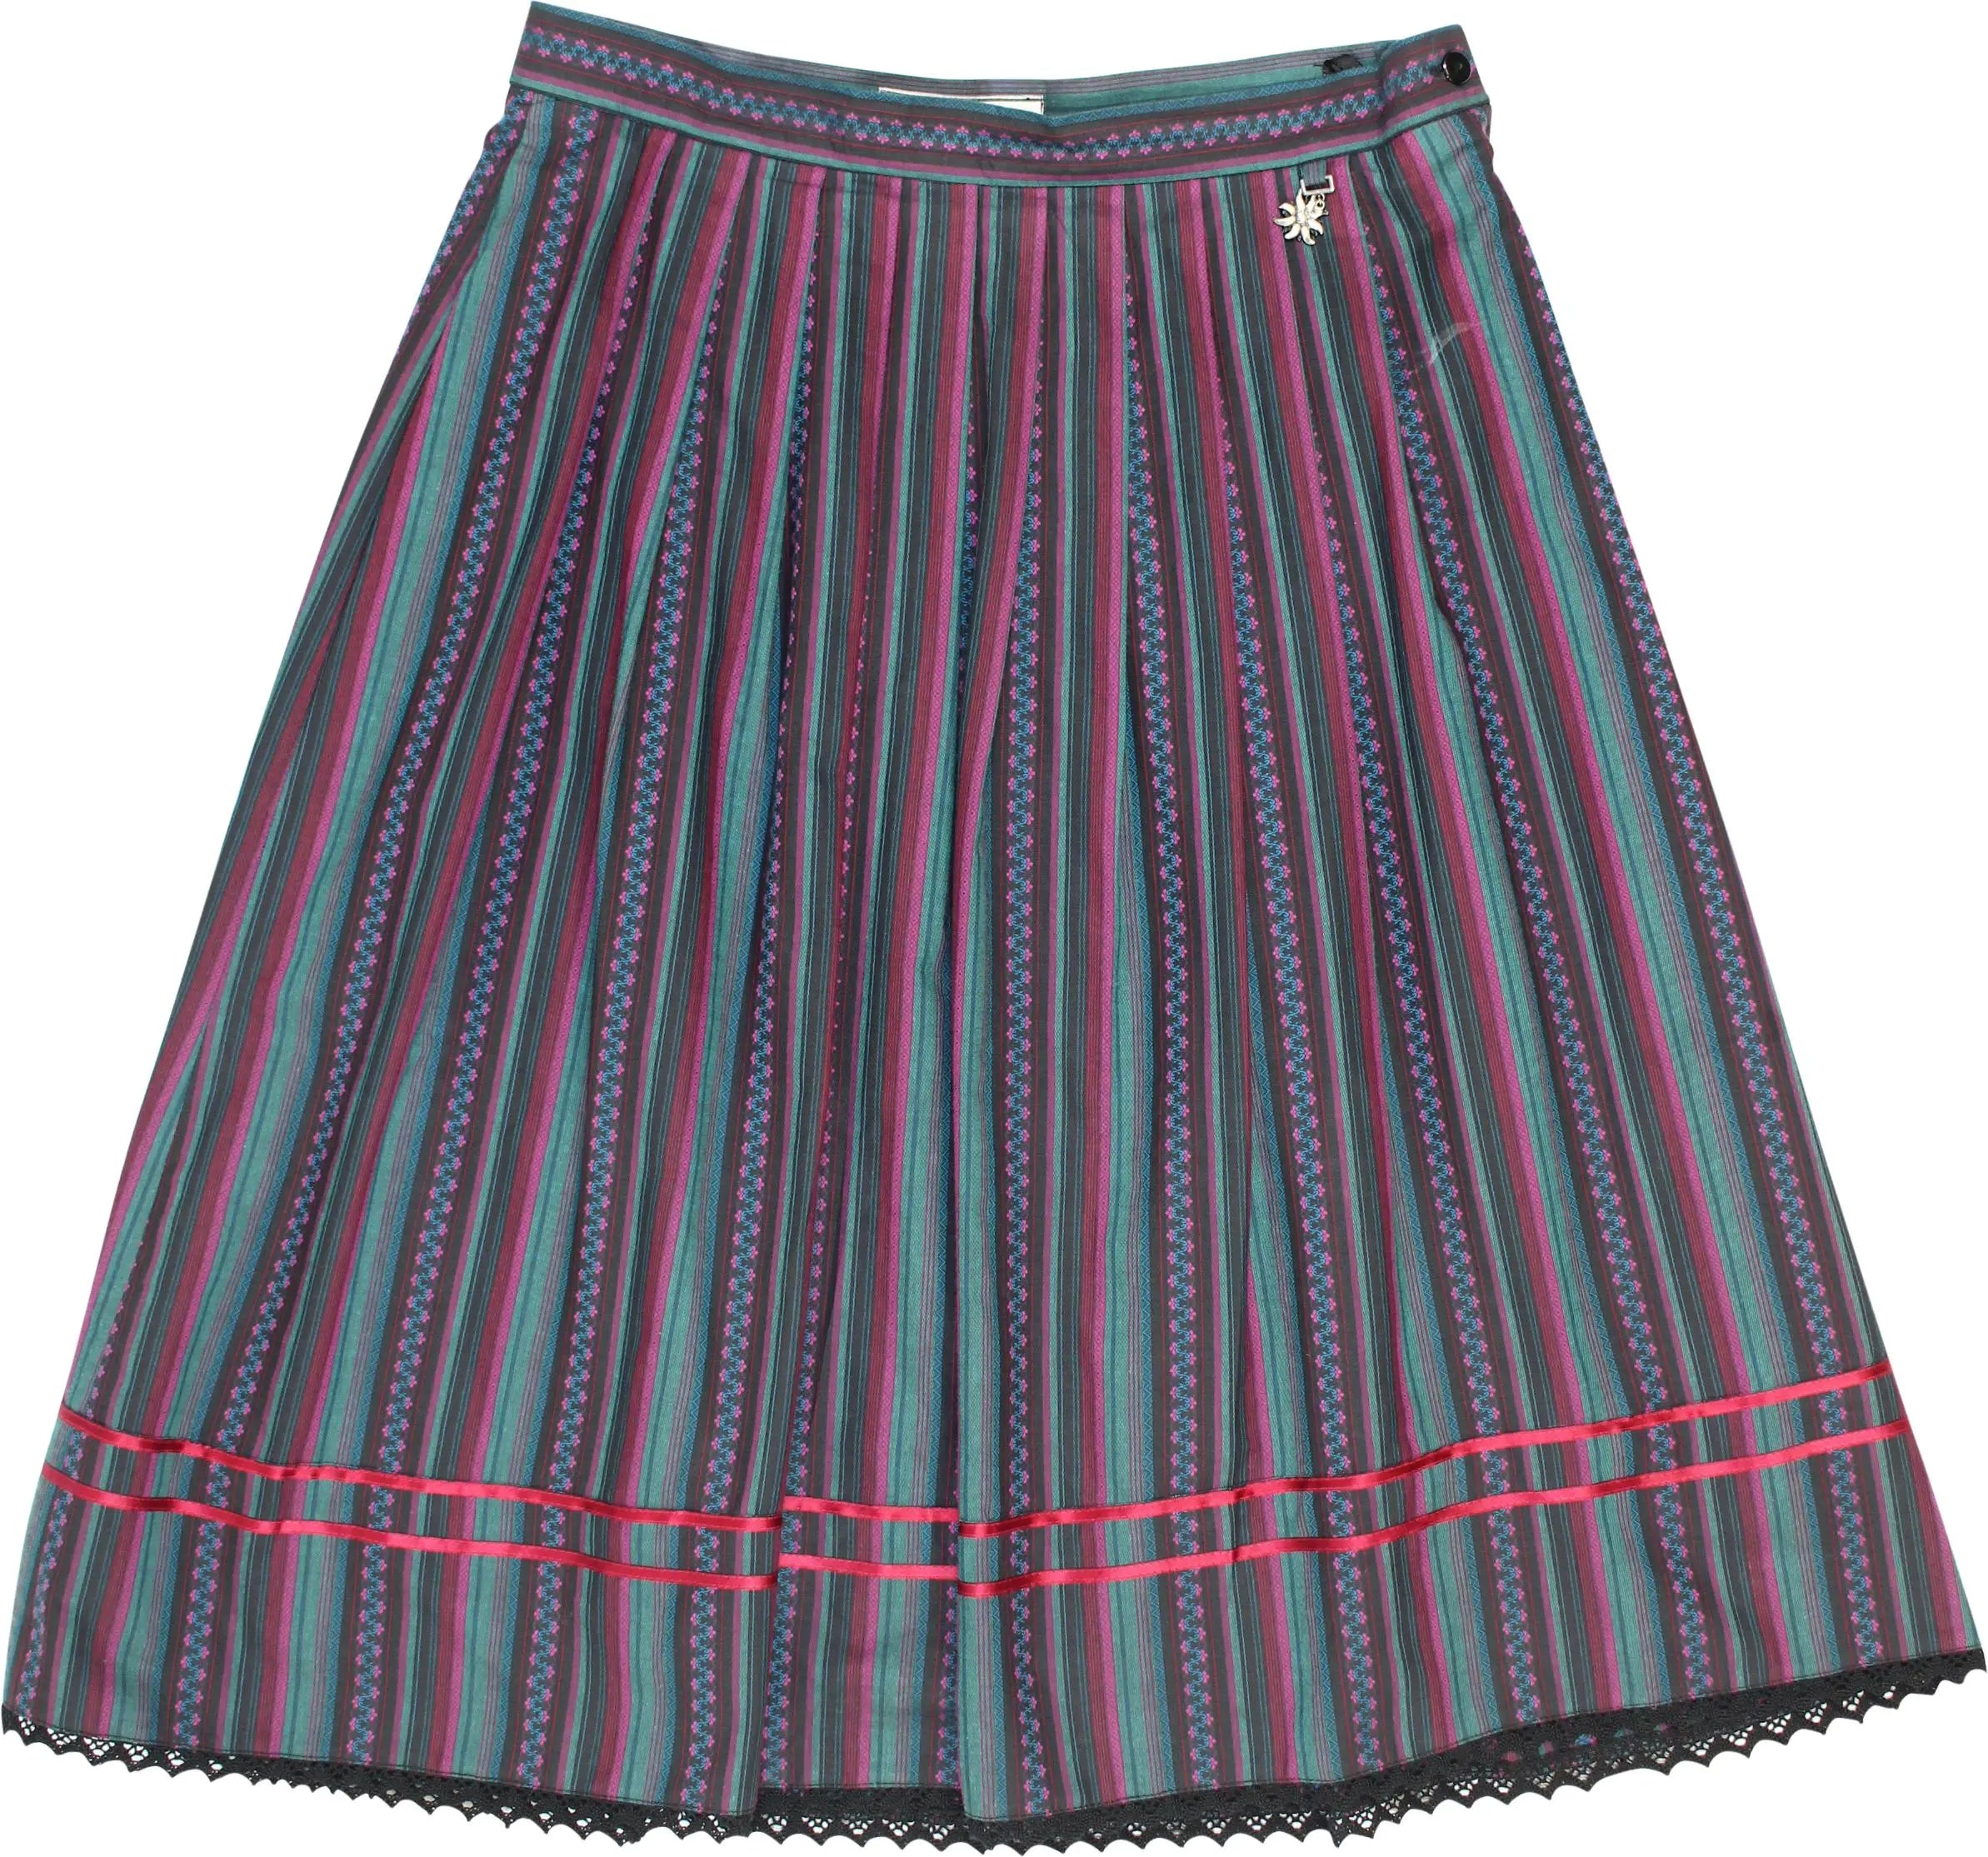 Alphoen - Folklore Skirt- ThriftTale.com - Vintage and second handclothing